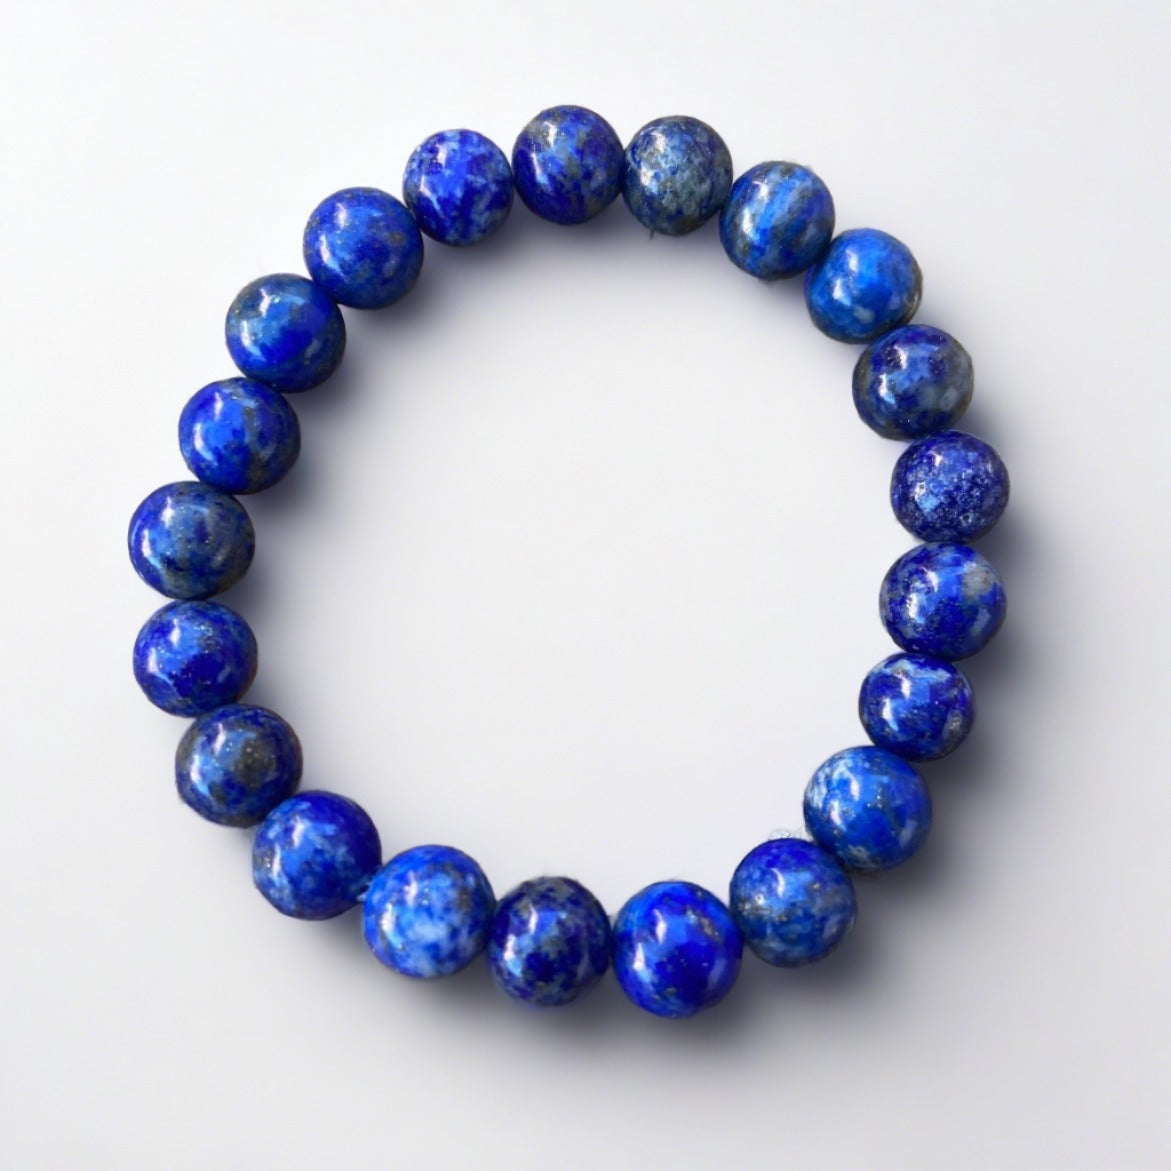 Lapis lazuli stretch cord bracelet on rock background